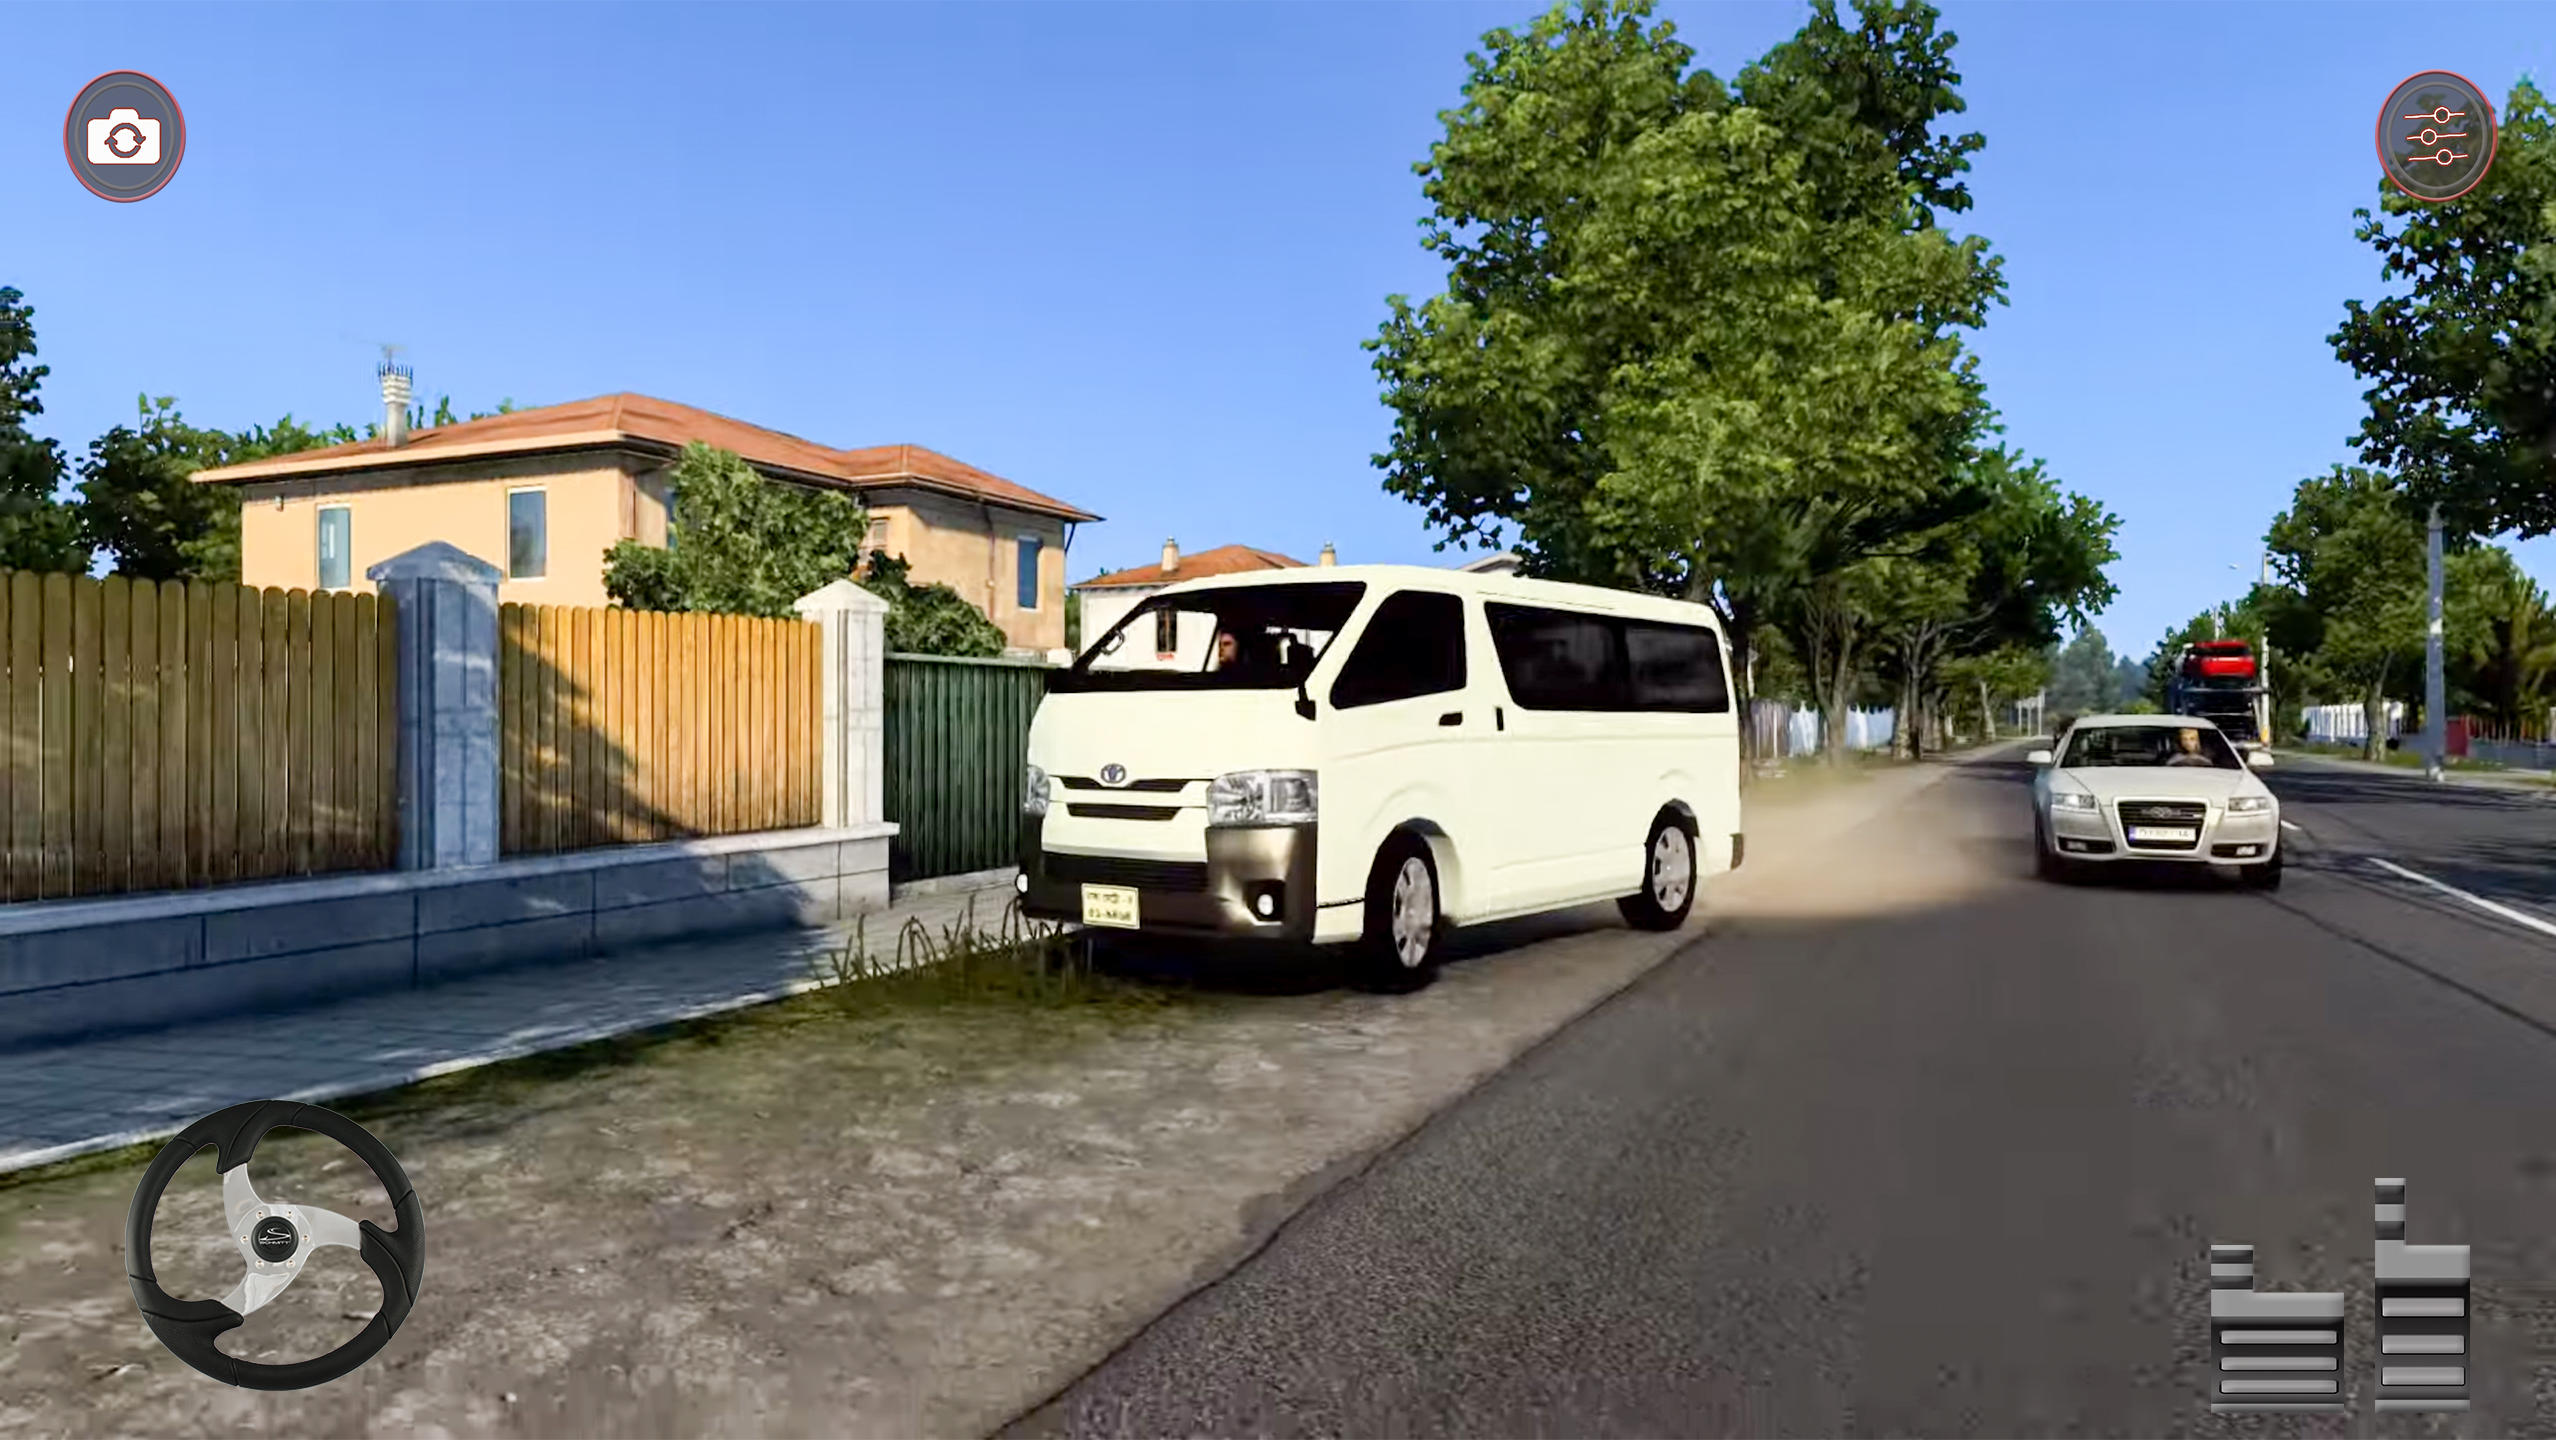 Screenshot 1 of कार खेलों दुबई वैन सिम्युलेटर 2